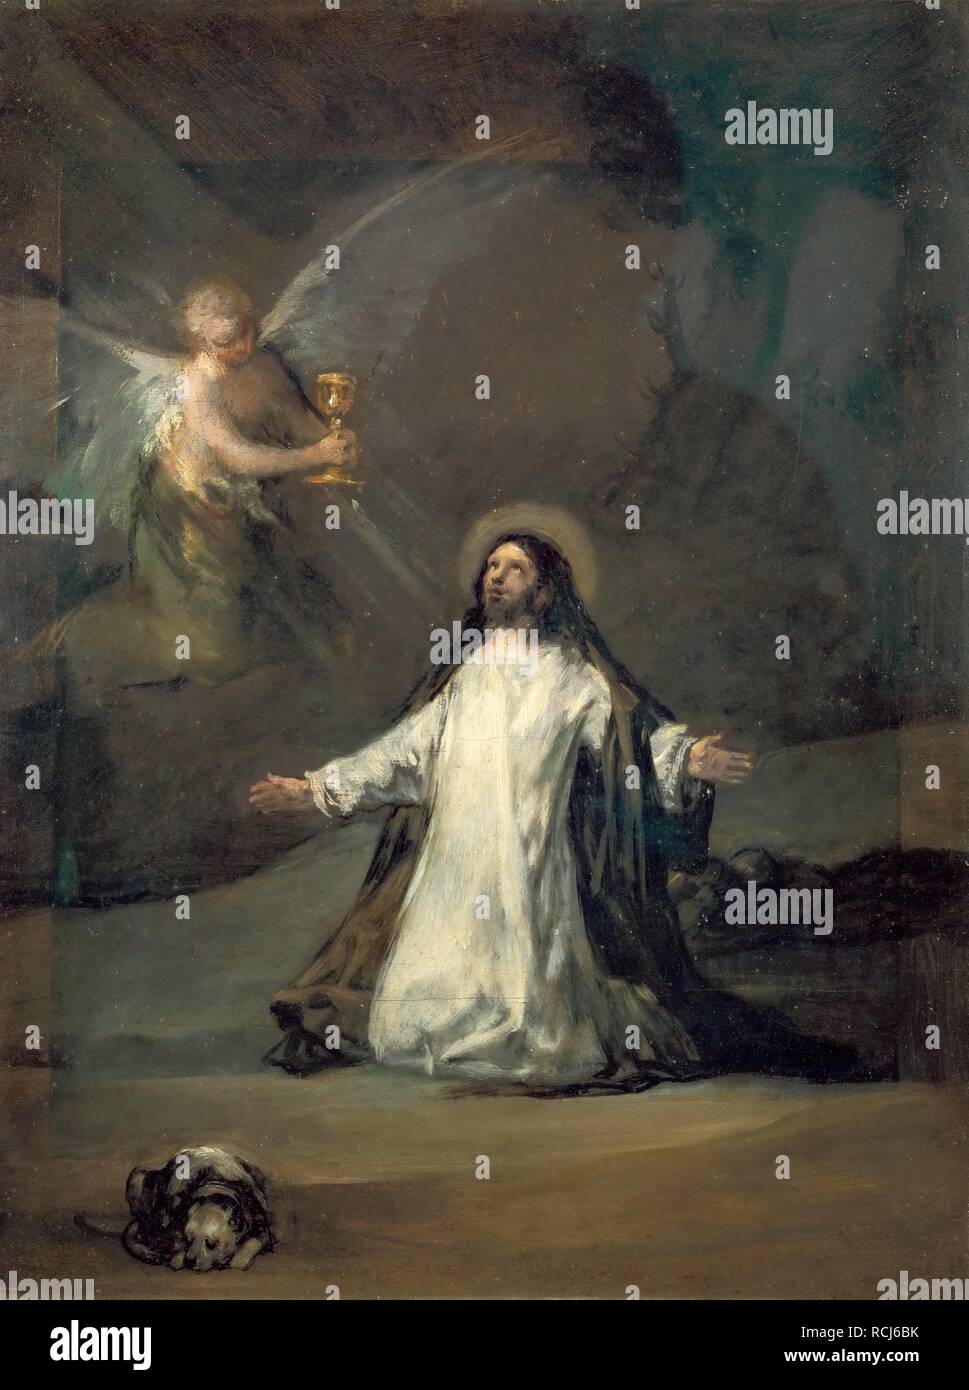 Christ in Gethsemane. Museum: Musee du Louvre, Paris. Author: GOYA, FRANCISCO DE. Stock Photo